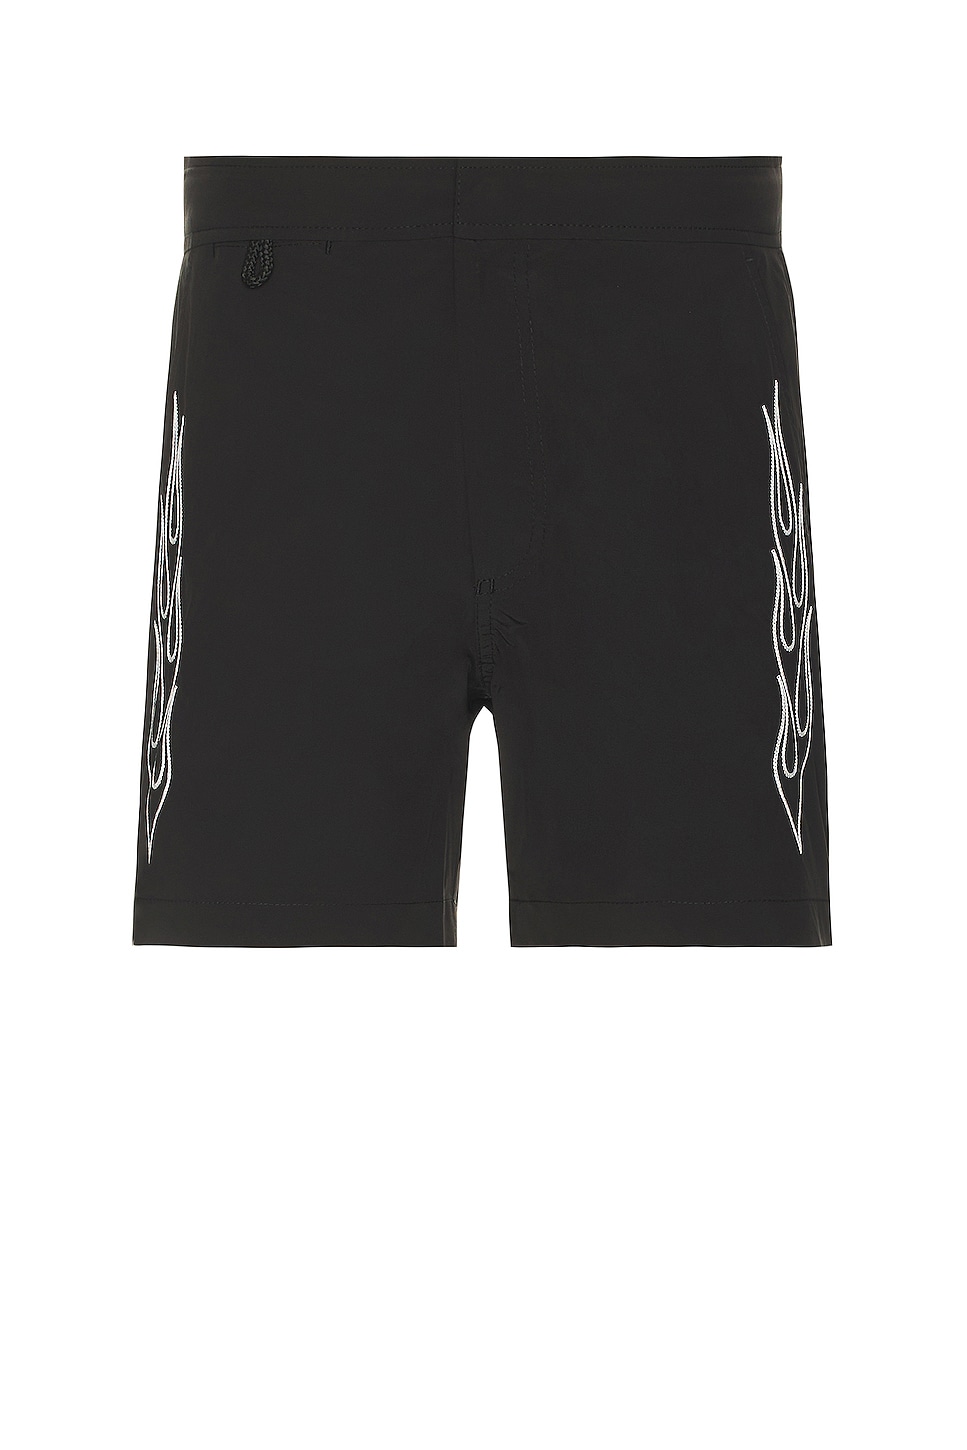 Image 1 of DOUBLE RAINBOUU Pool Shark Swim Shorts in Blazed Black